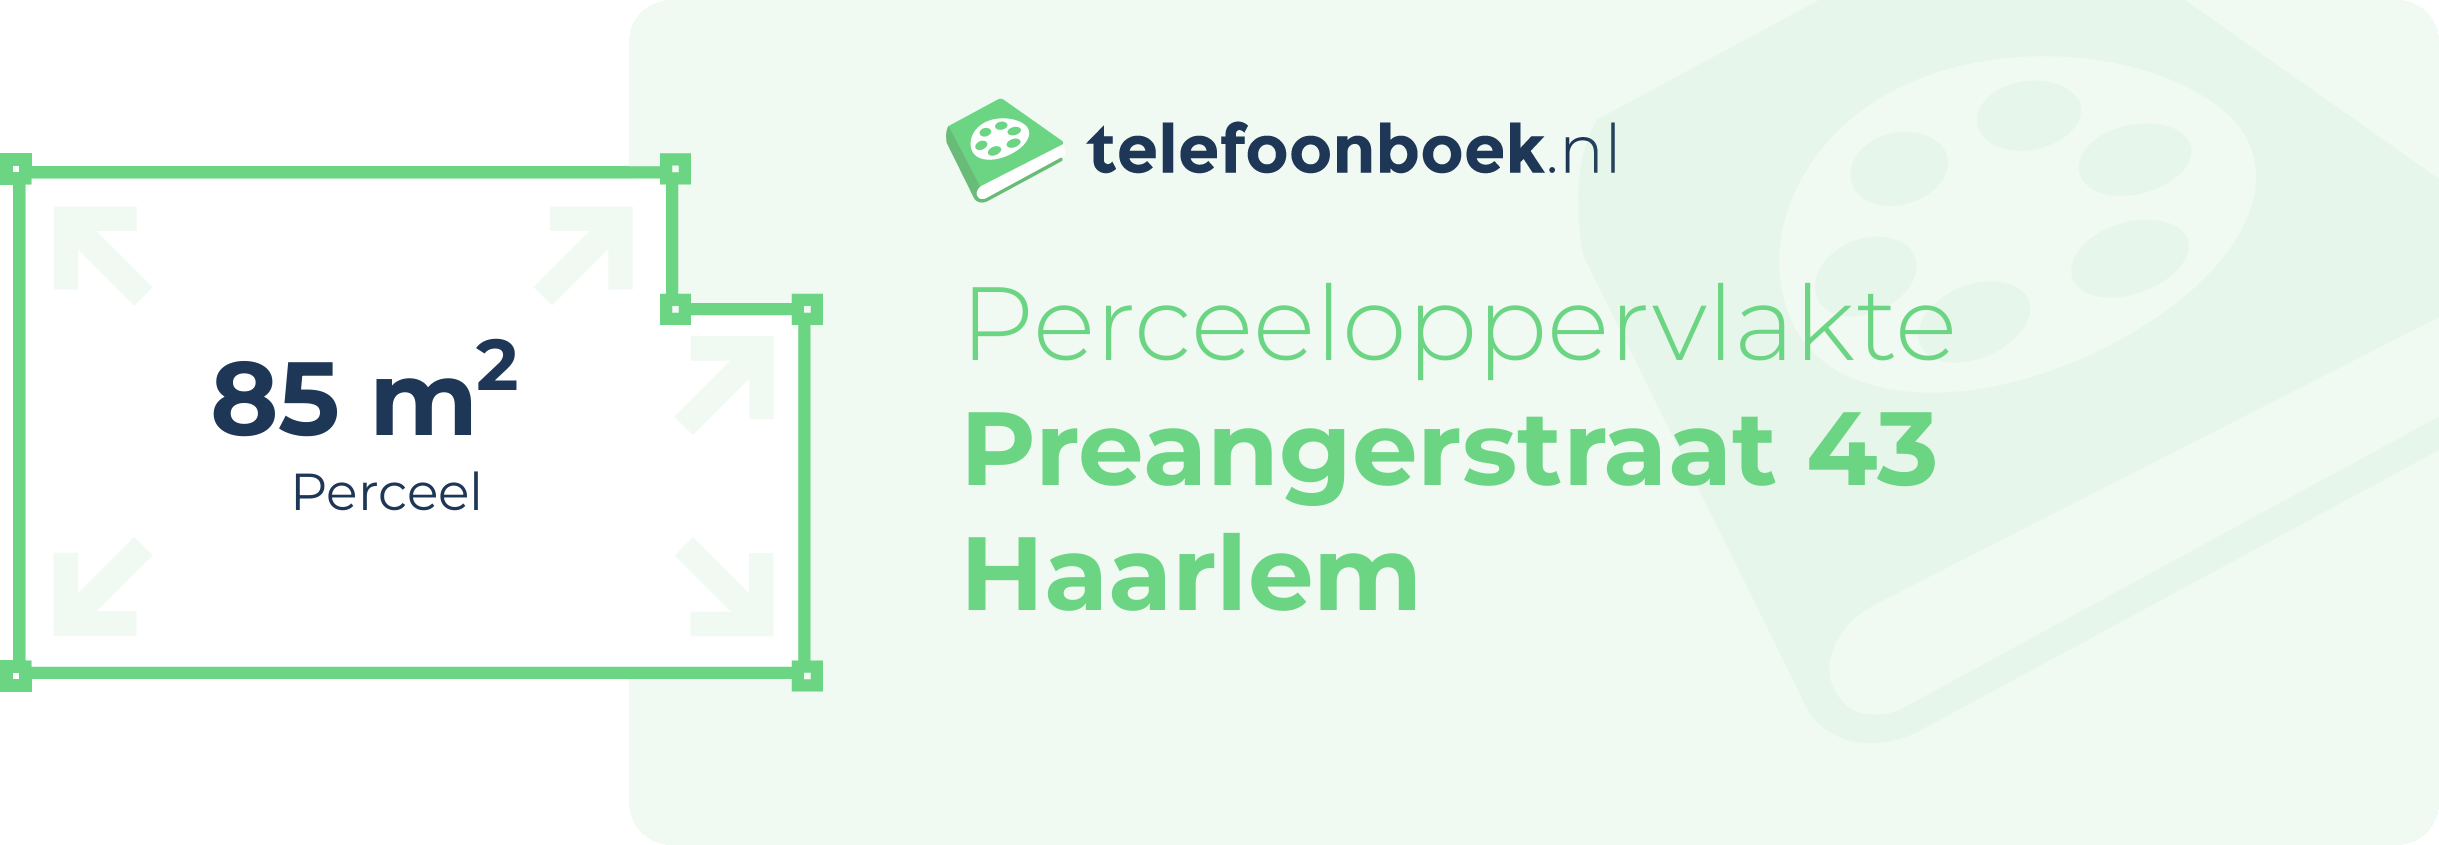 Perceeloppervlakte Preangerstraat 43 Haarlem